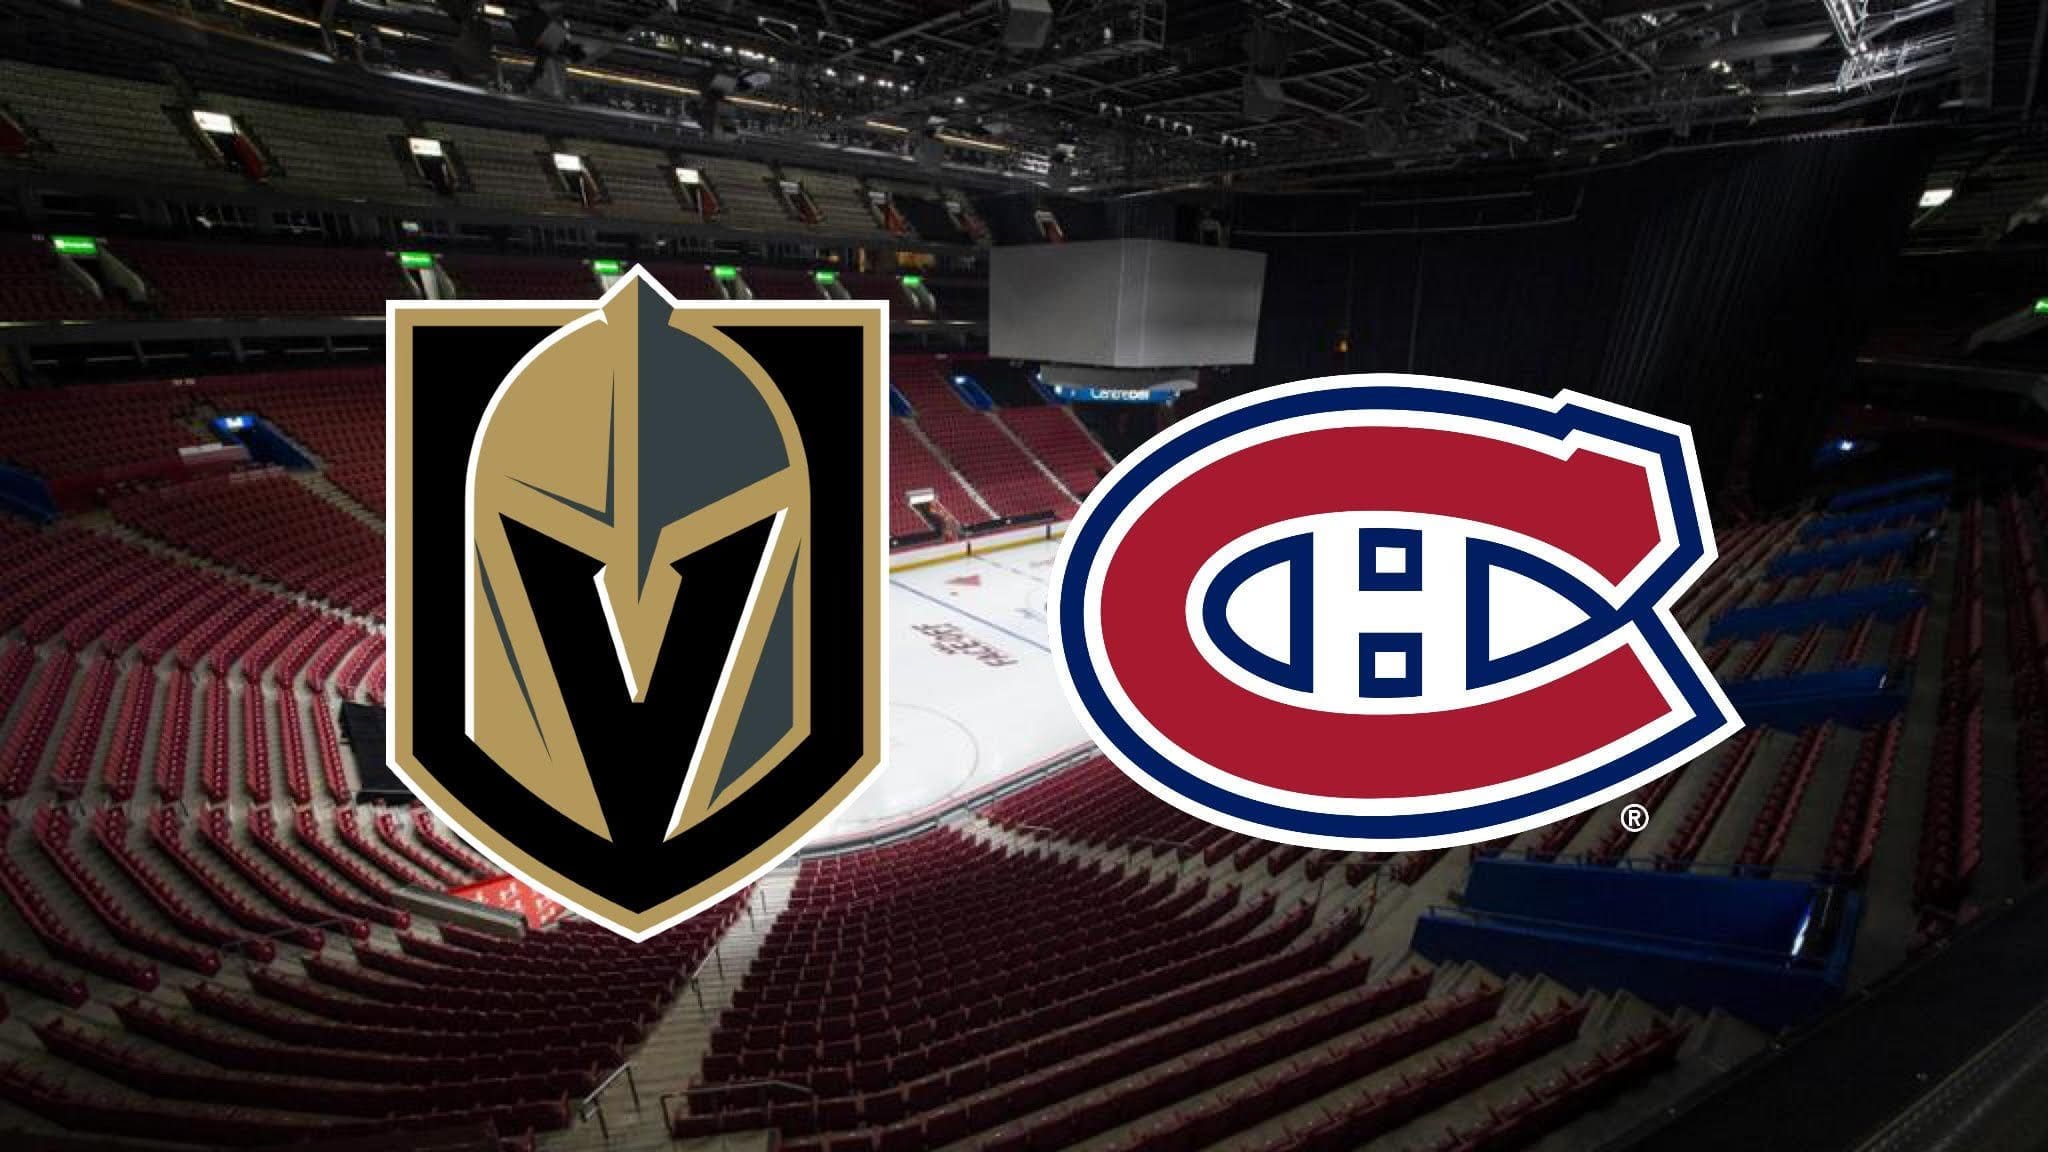 Vegas Golden Knights Montreal Canadiens AWAY